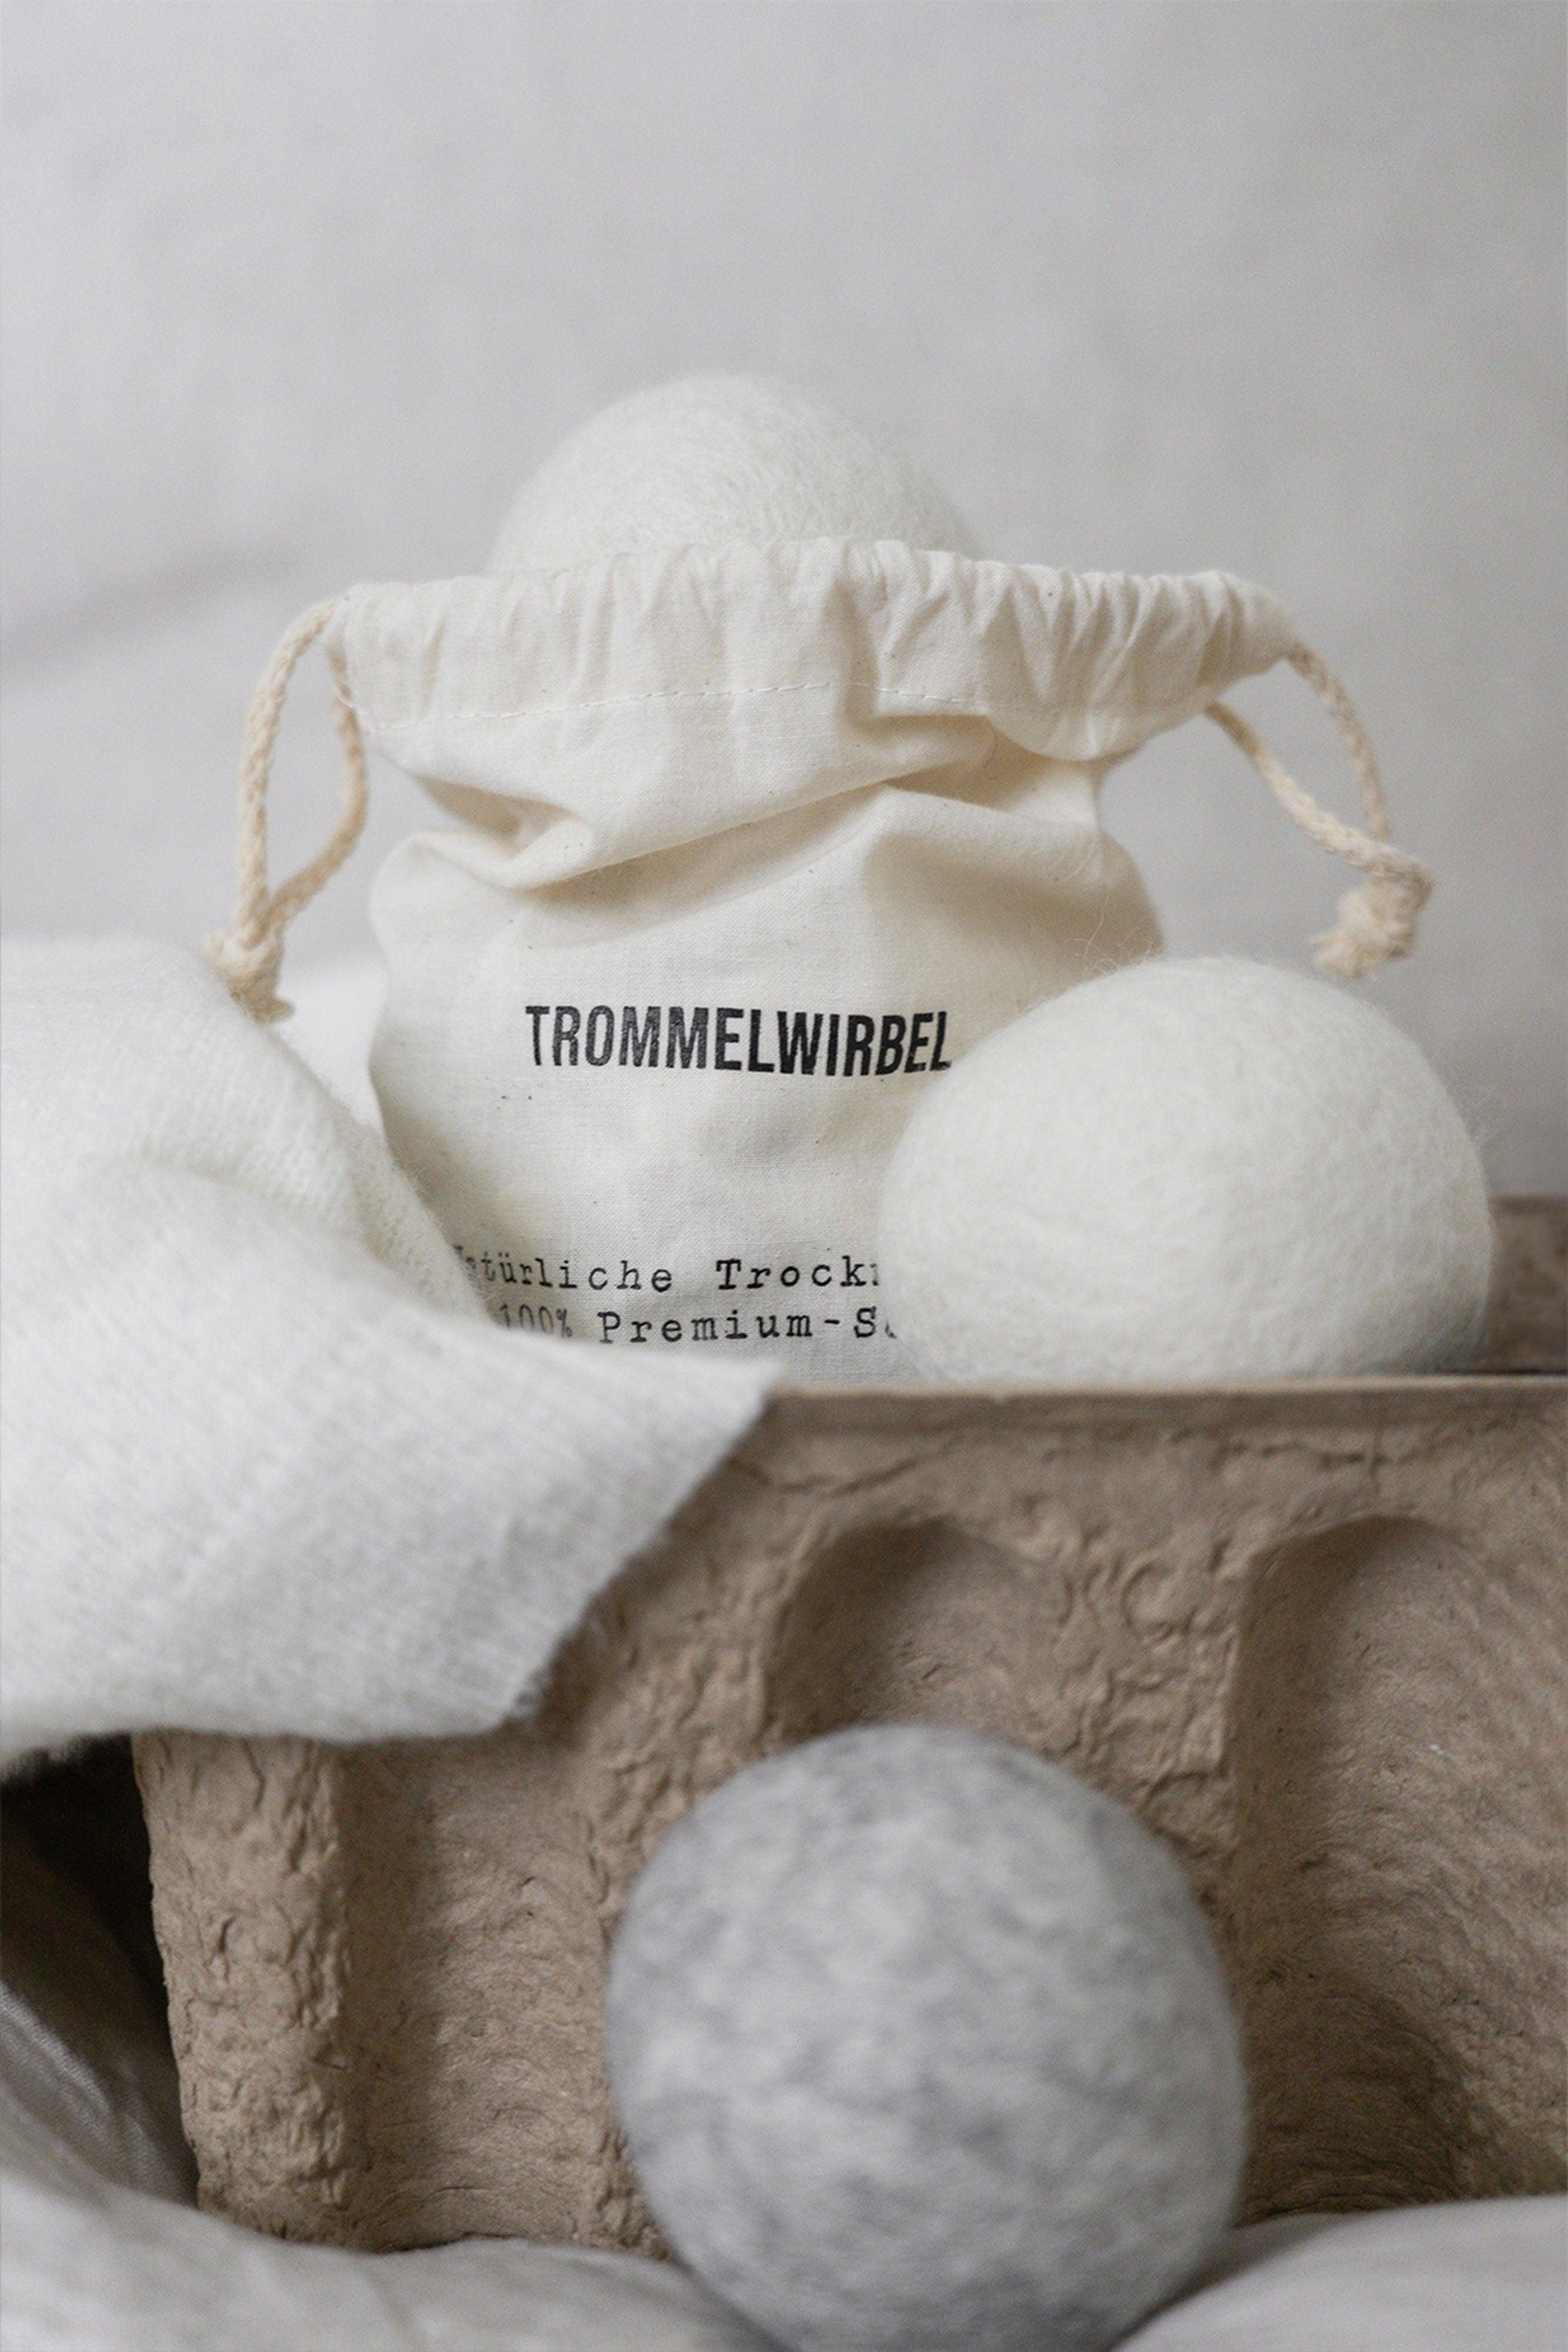 kaëll - Natürliche Trocknerbälle "Trommelwirbel" - Leja Concept Store kaëll Waschmittel